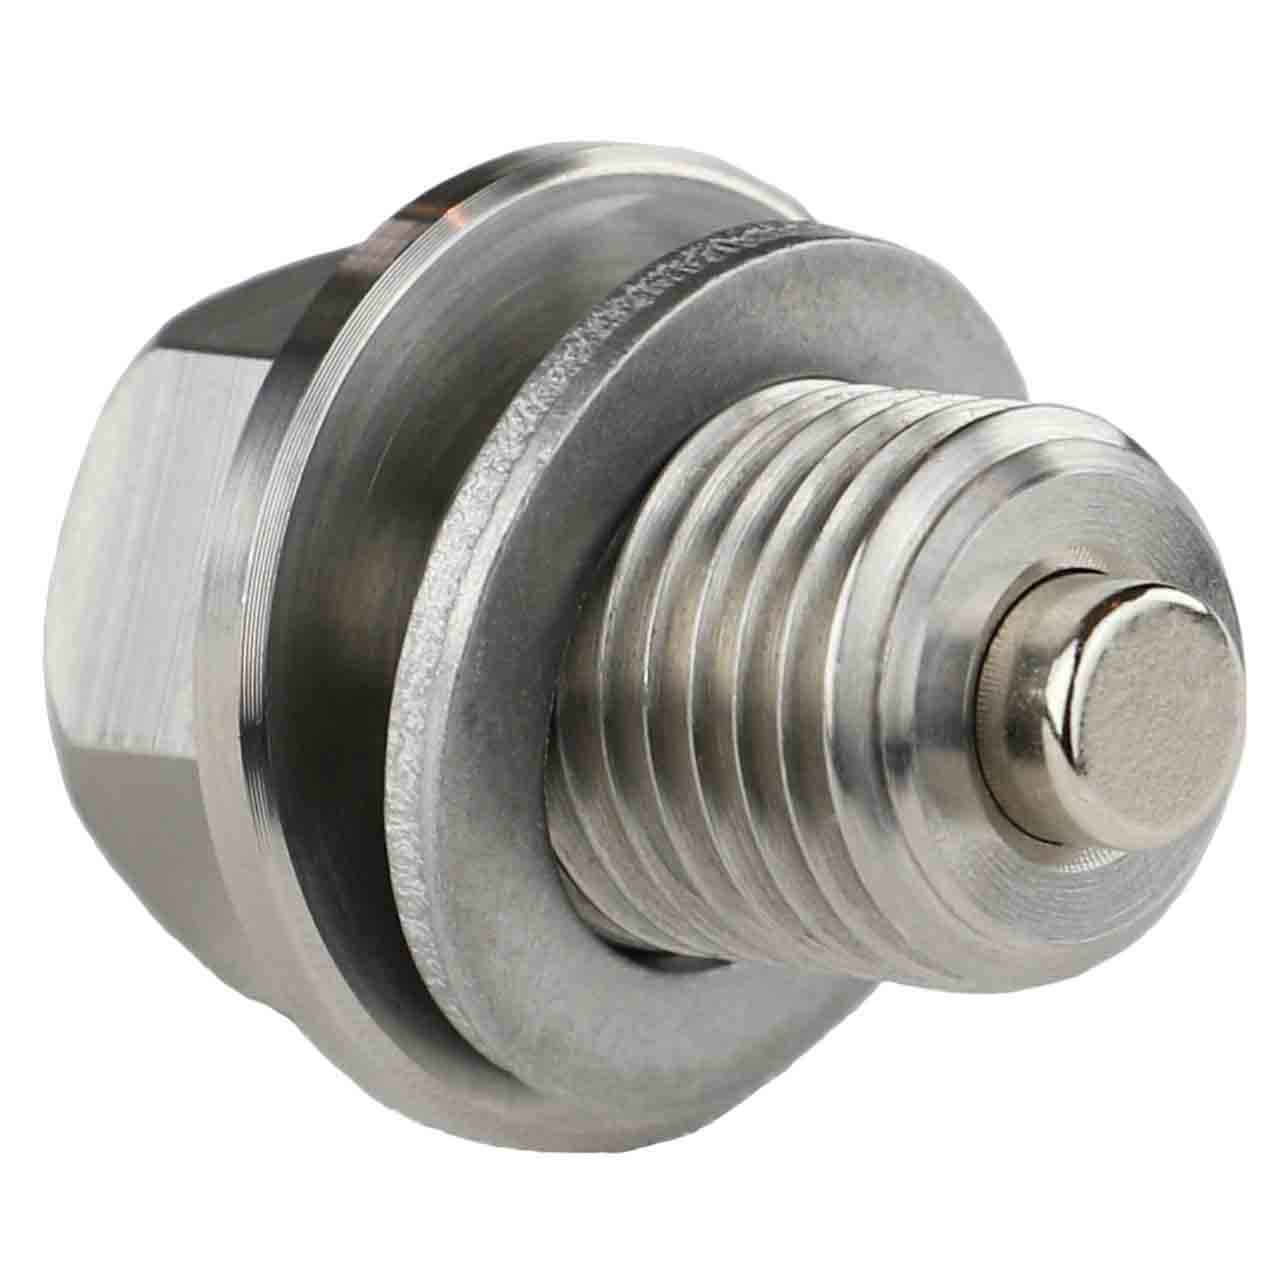 Suzuki Esteem Magnetic Oil Drain Plug - 1999-2002 - 1.8 Liter - 4 Cylinder - Made In USA - Stainless Steel - Part Number 09247-14044